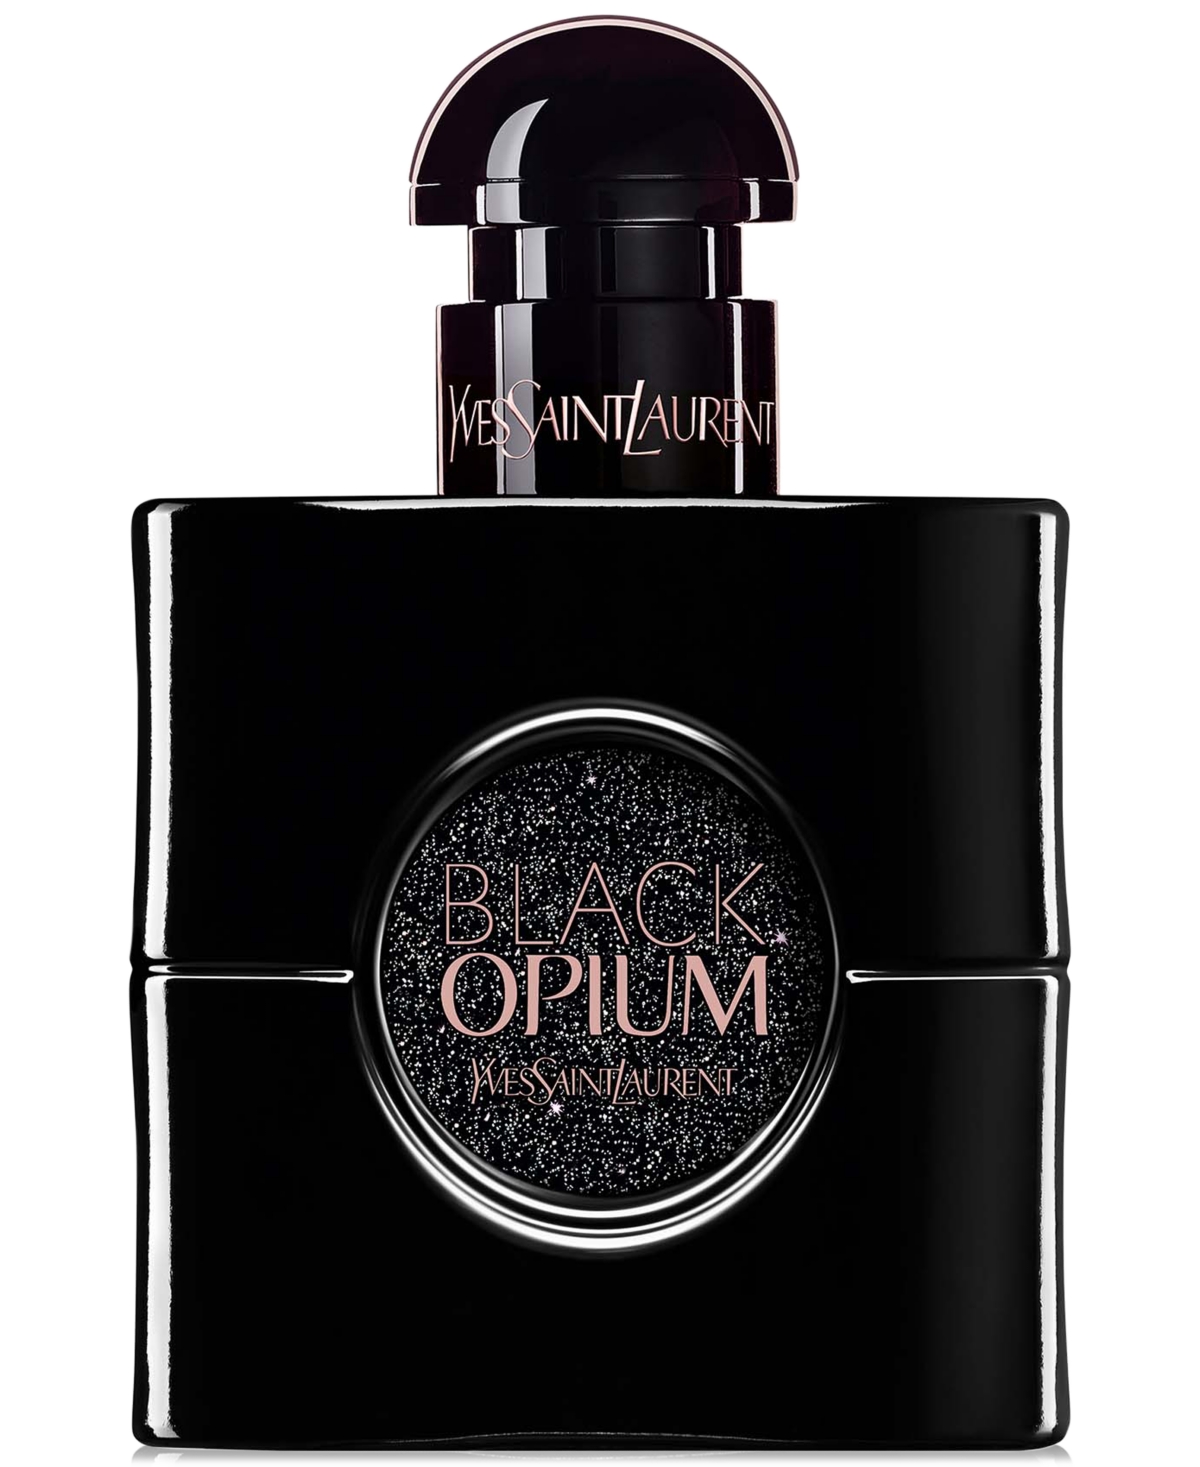 Black Opium Le Parfum, 1 oz.